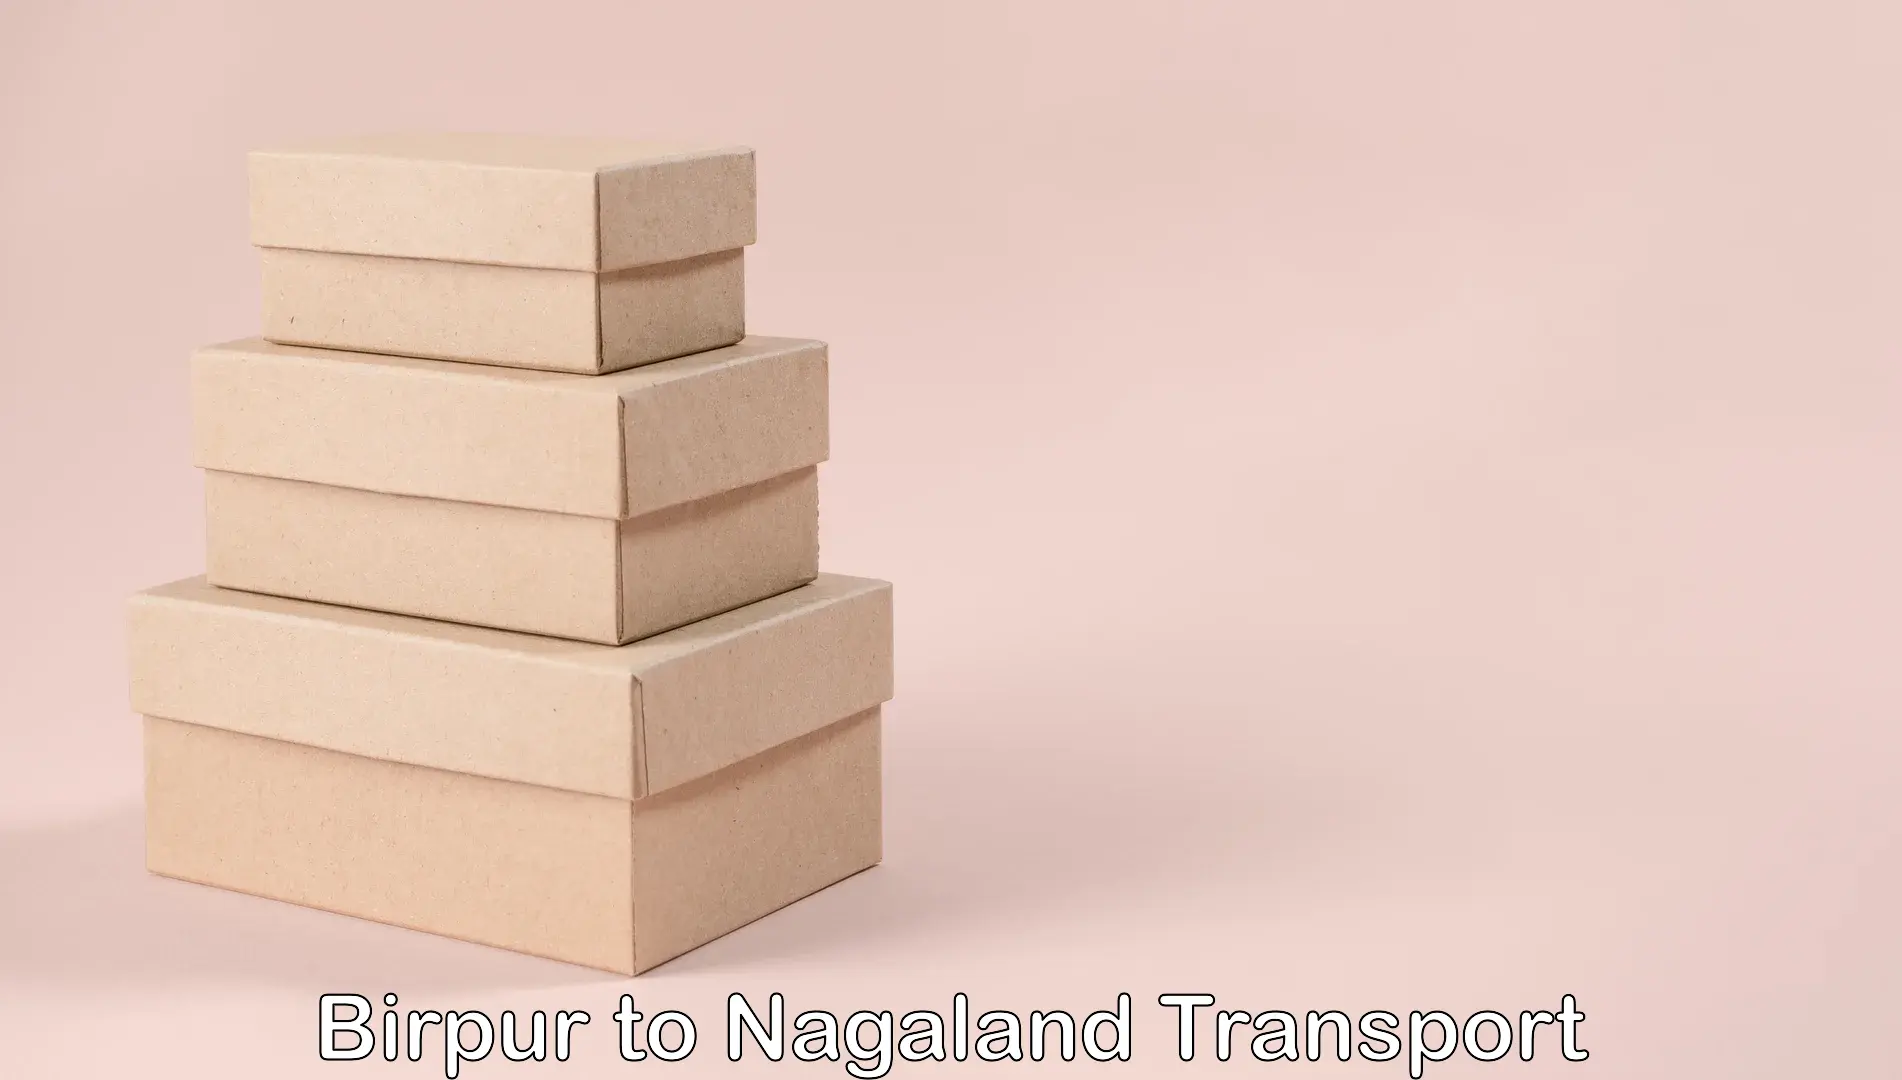 Online transport service Birpur to Nagaland